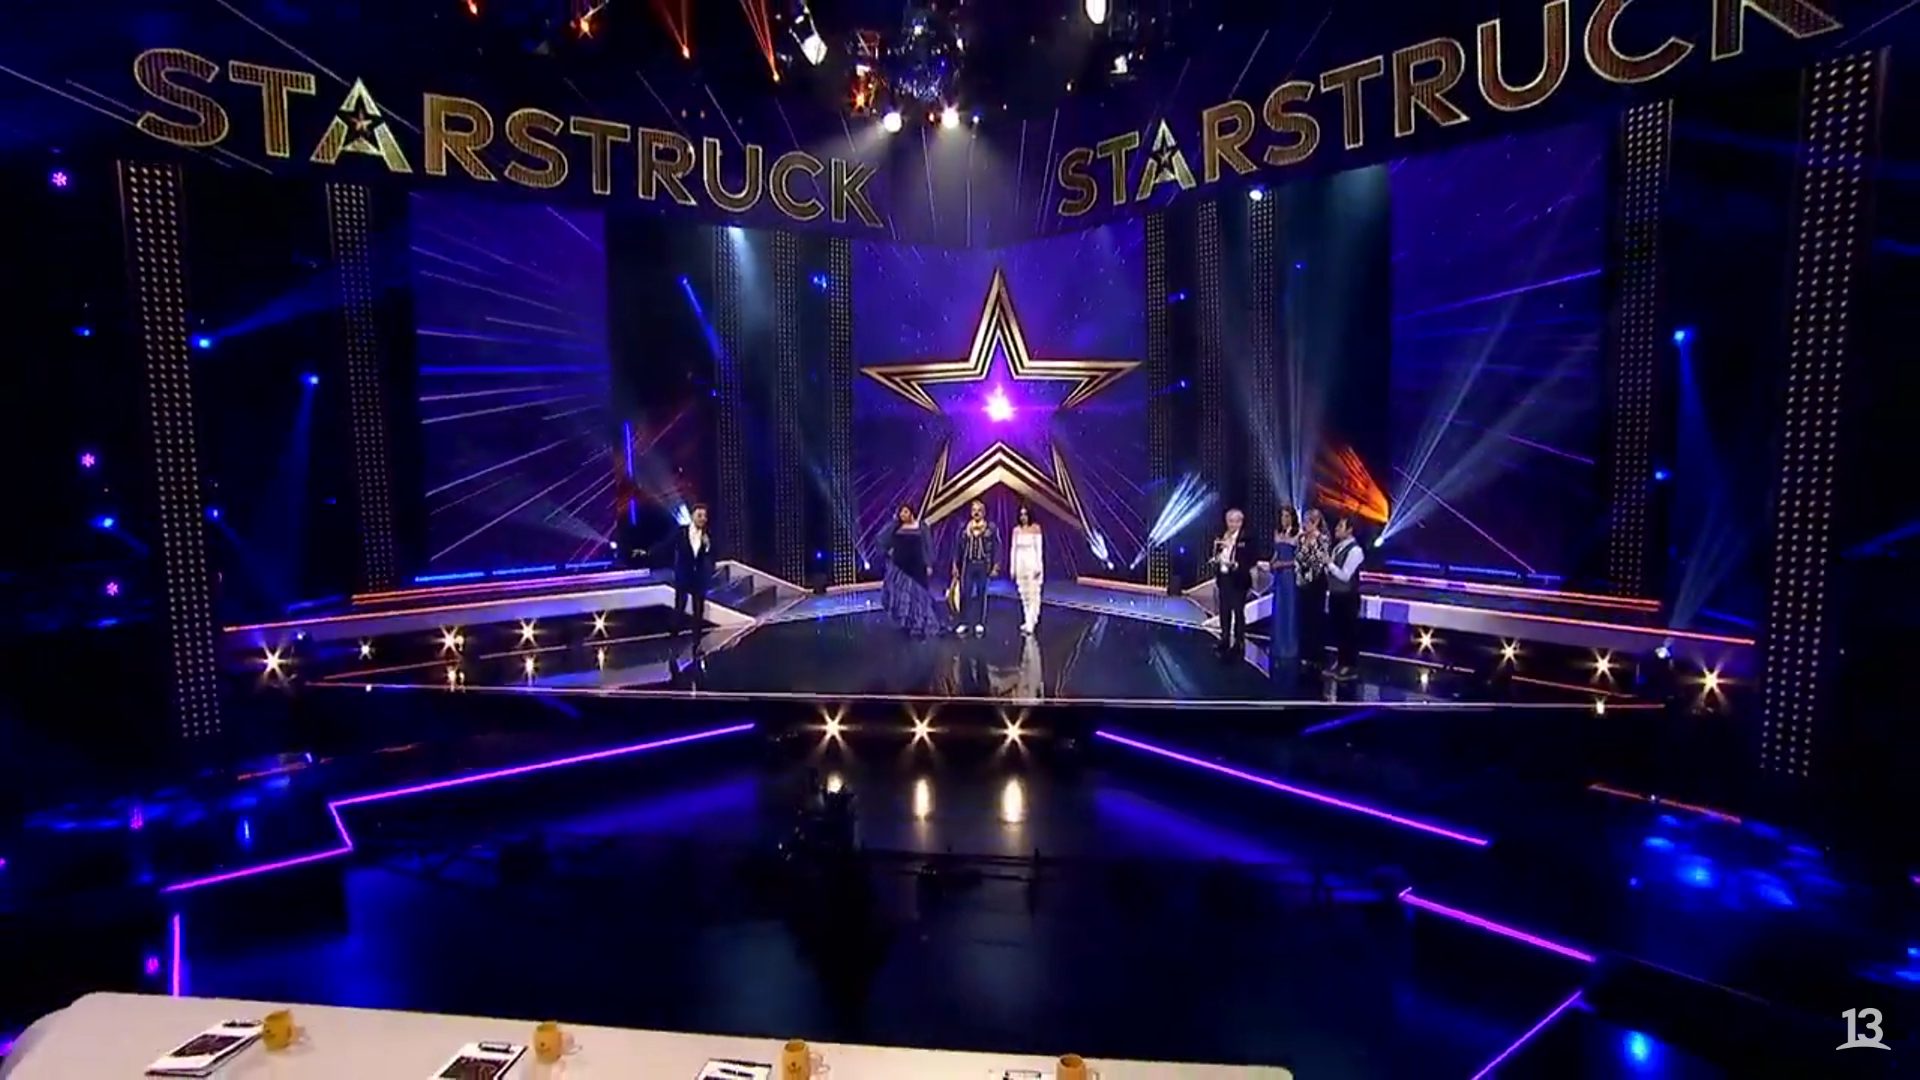 Starstruck - Canal 13